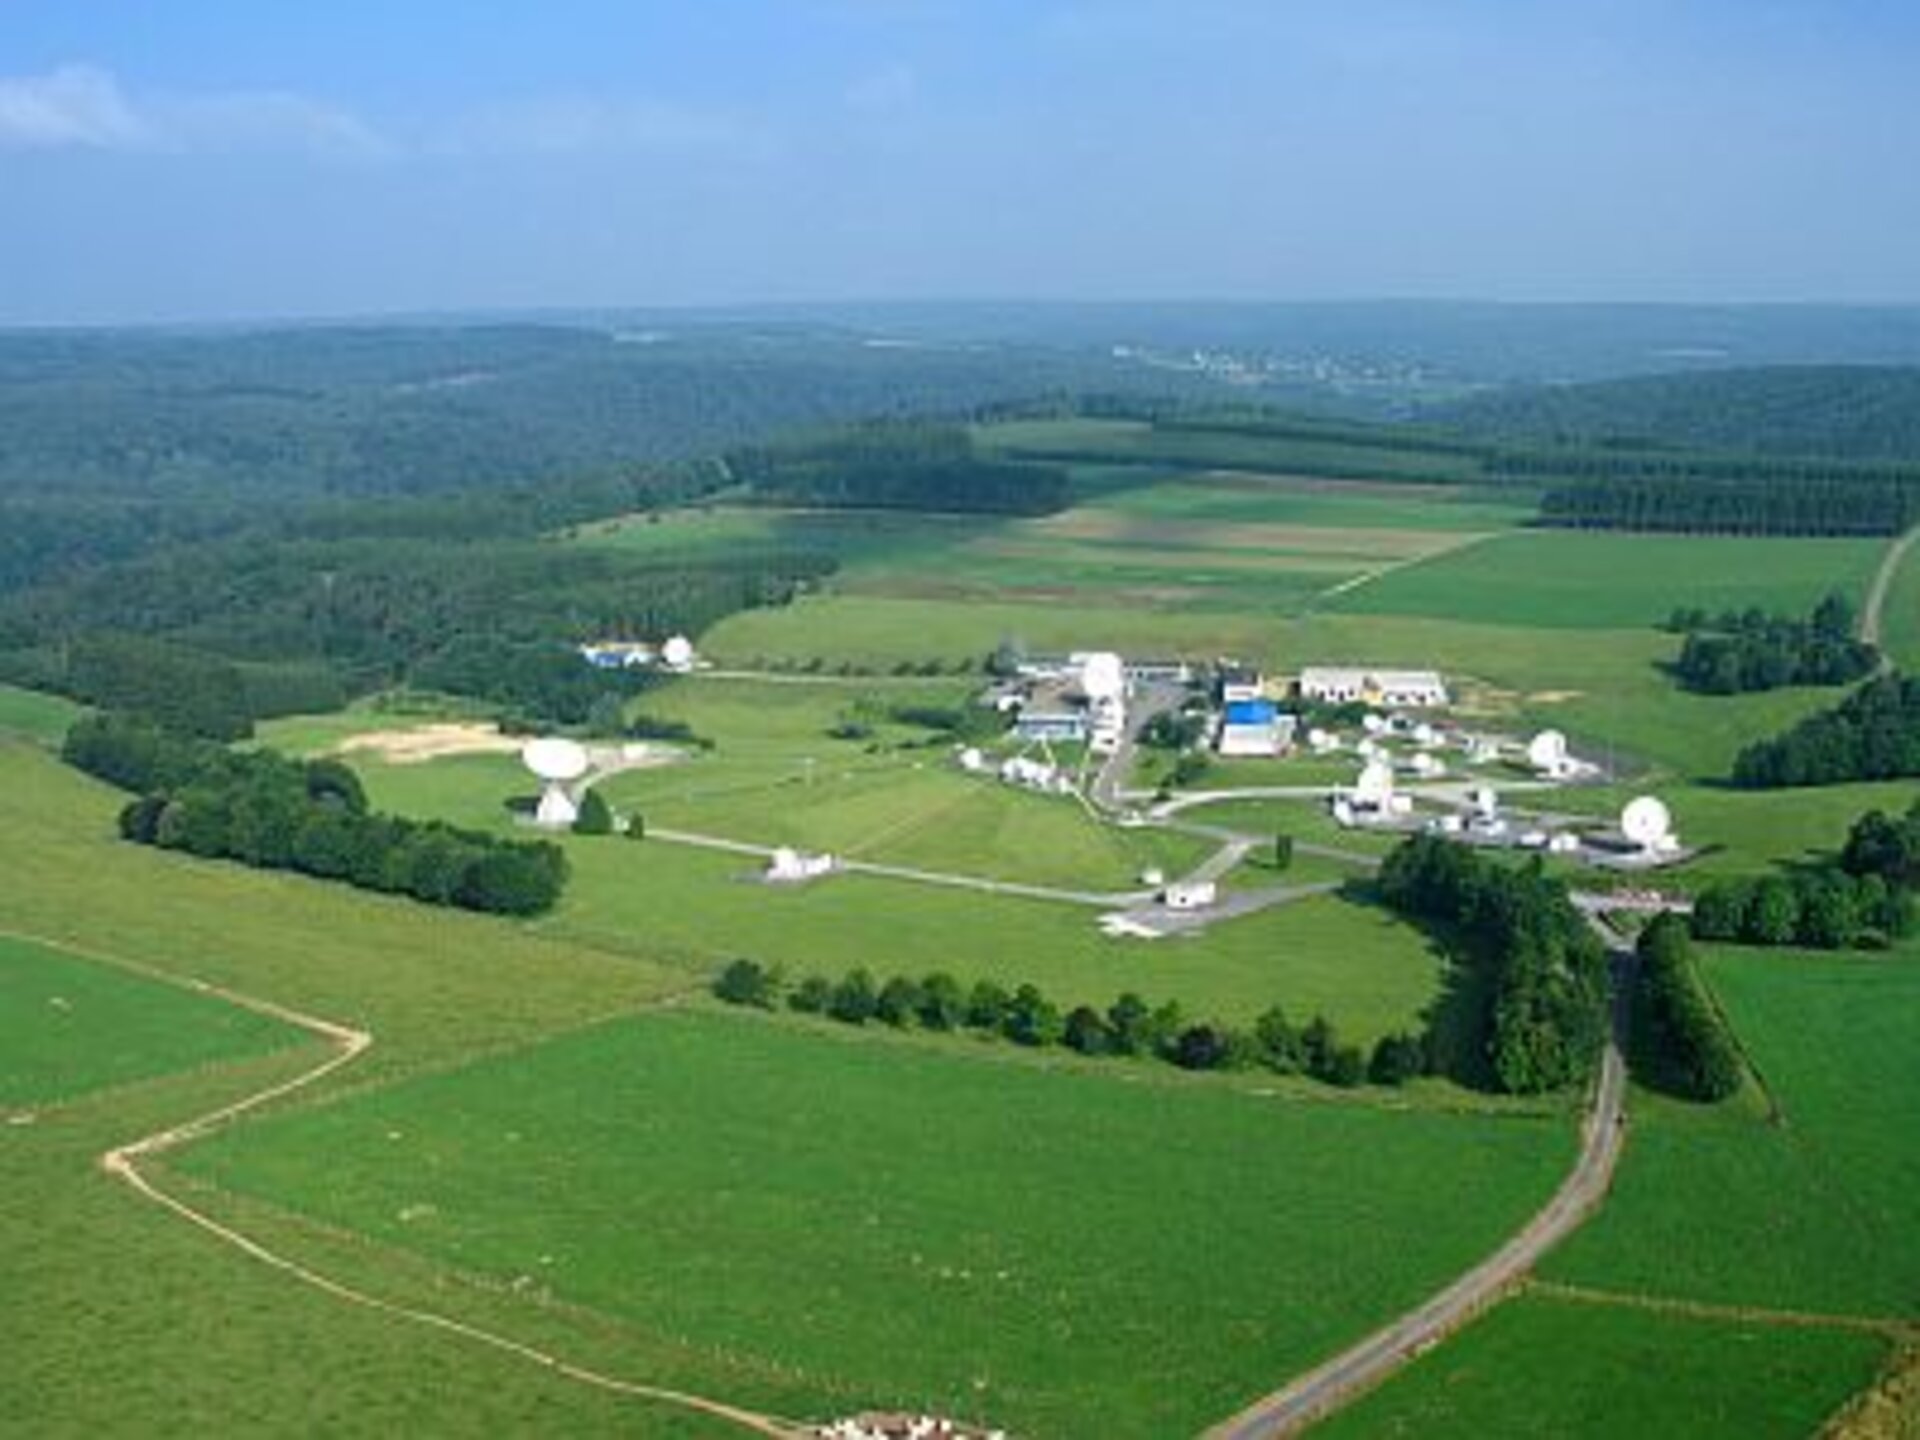 Aerial view of ESA's Redu ground station